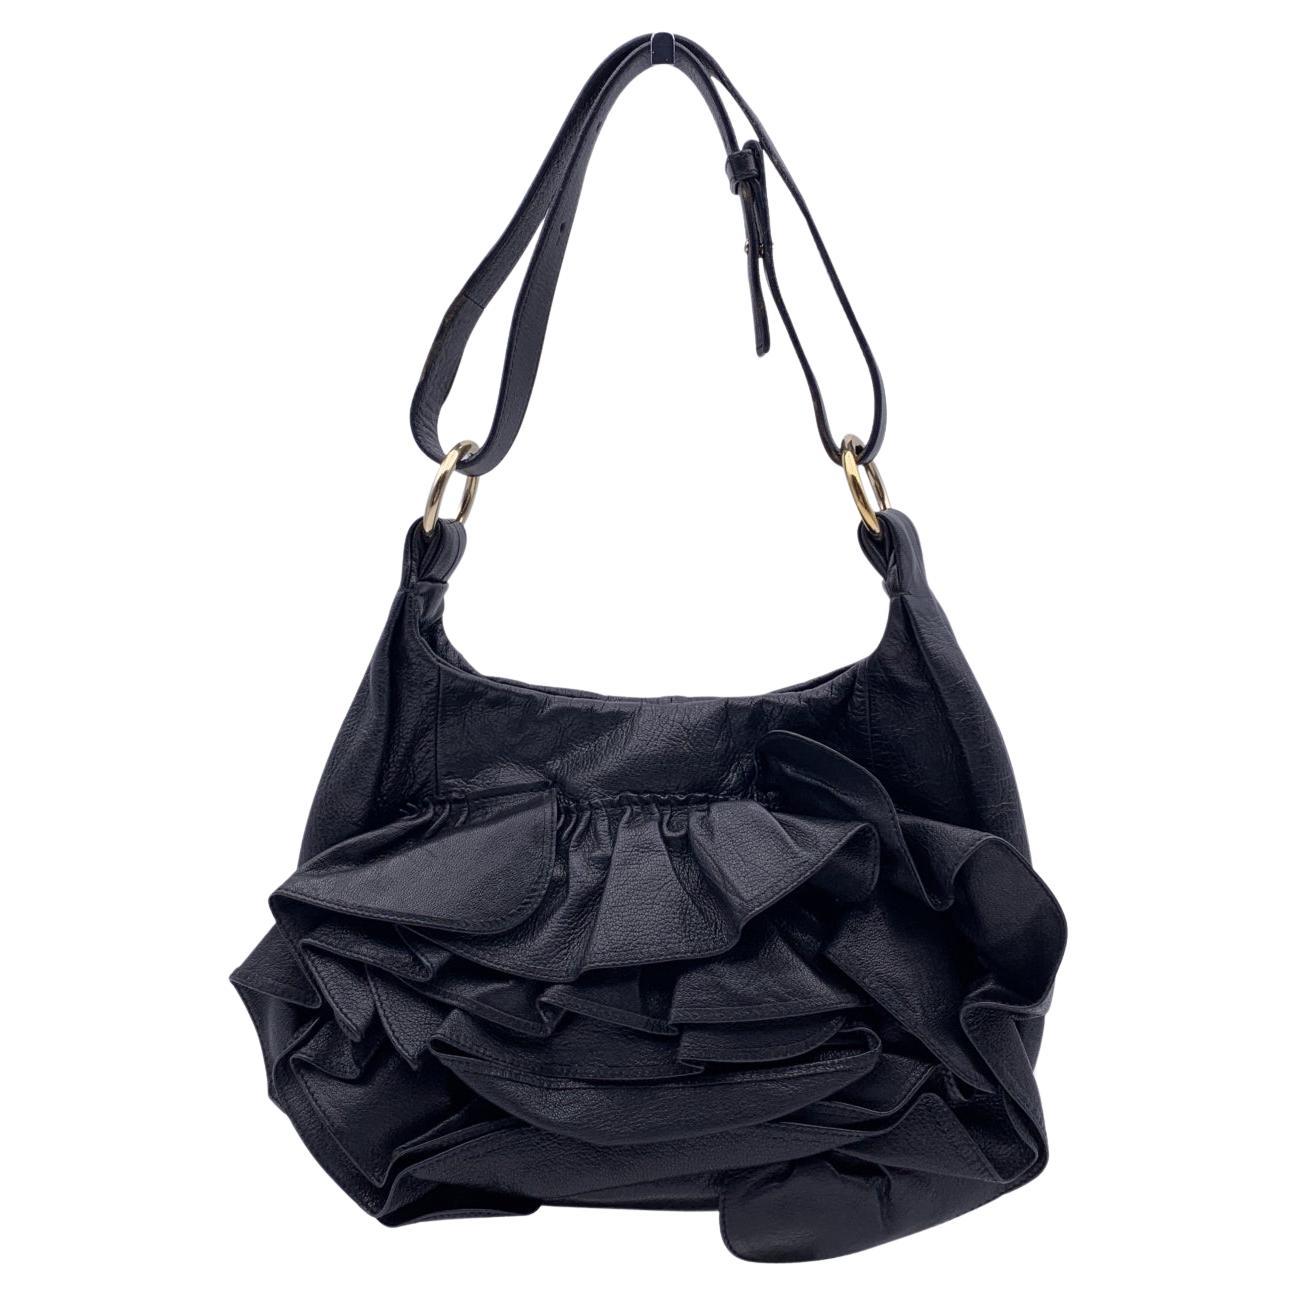 Yves Saint Laurent Black Ruffled Leather Hobo Tote Shoulder Bag